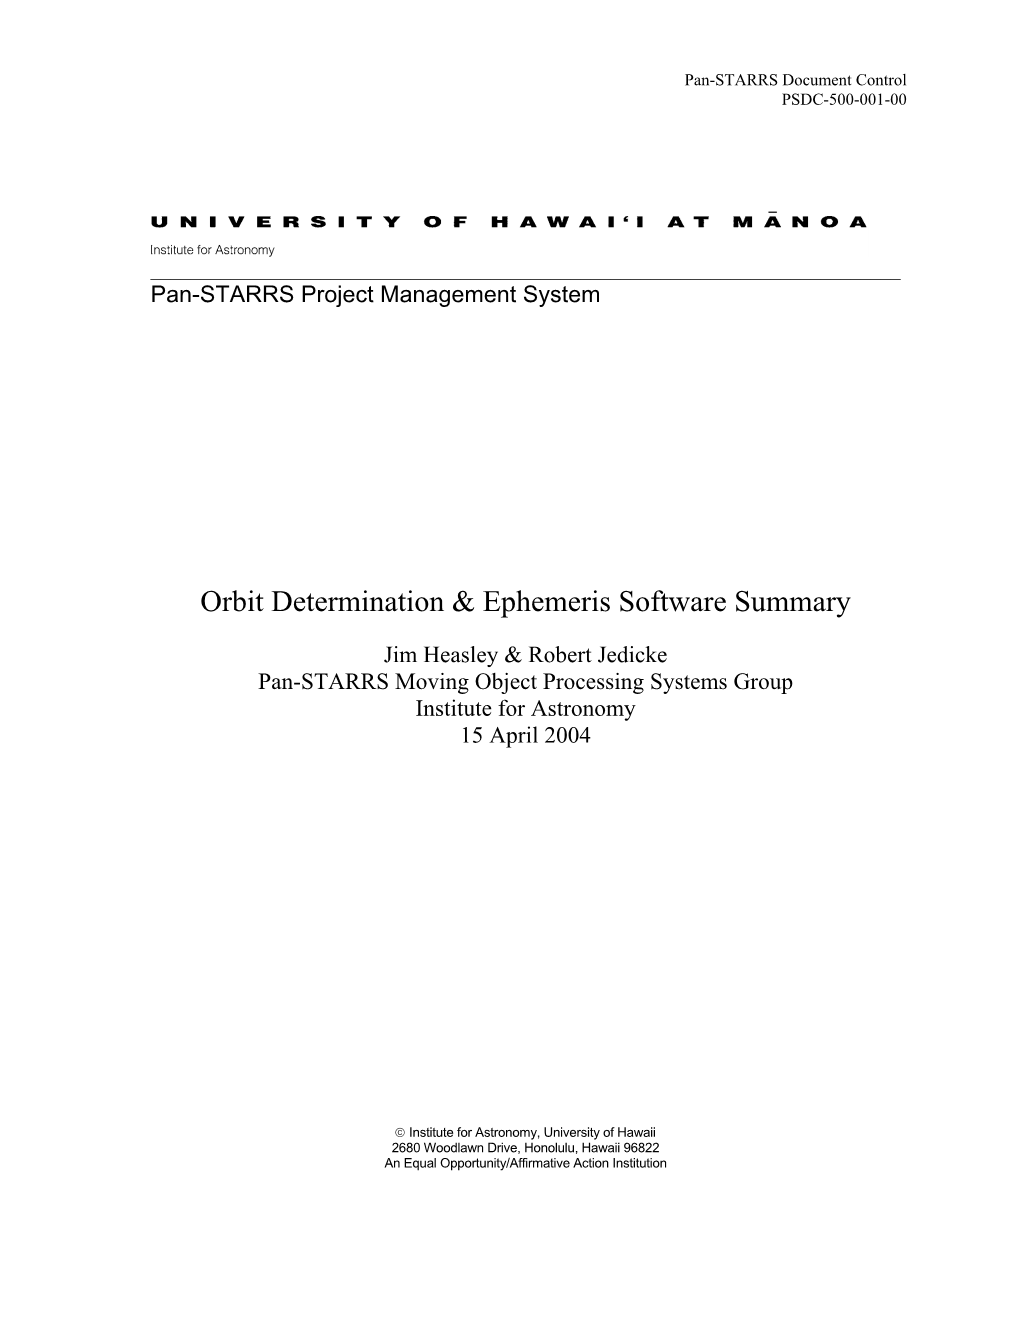 Orbit Determination & Ephemeris Software Summary